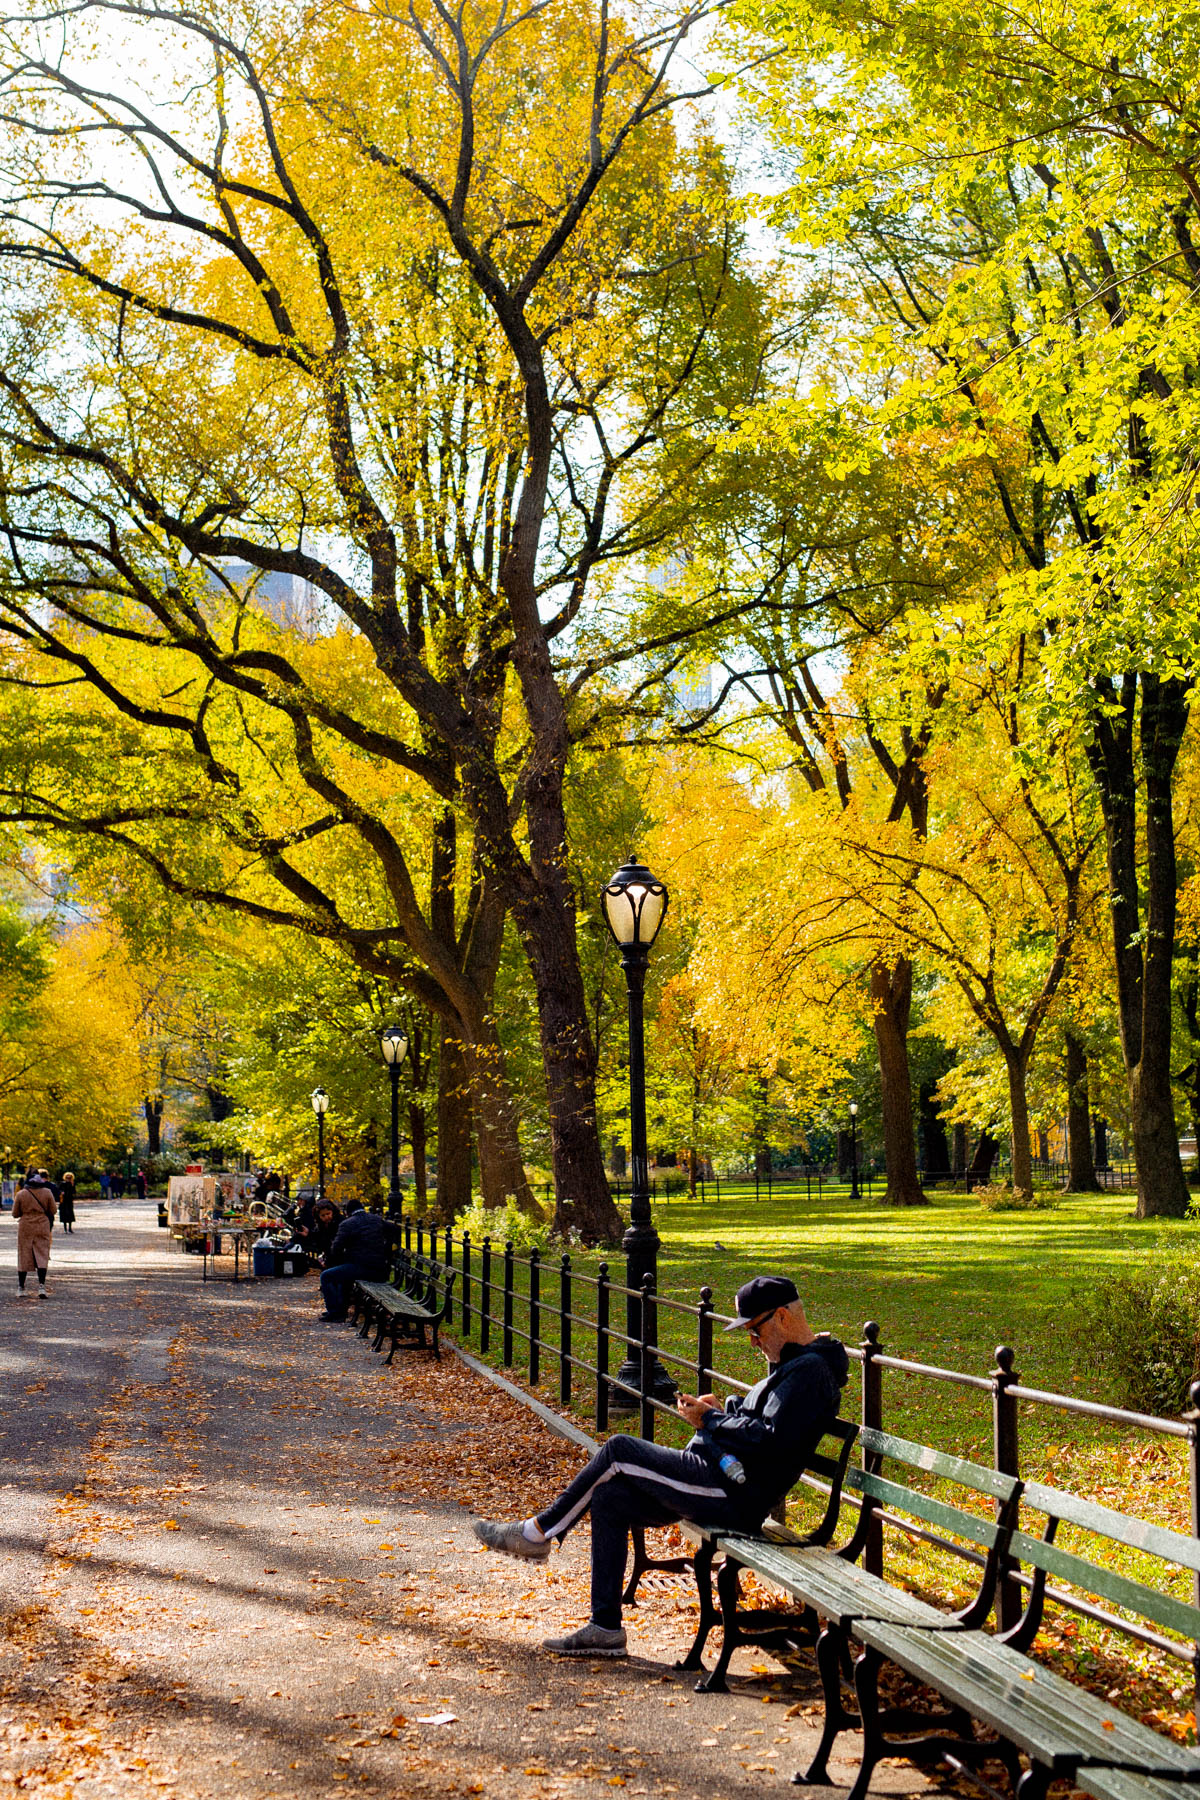 Central Park Fall foliage 
NYC Autumn Color
